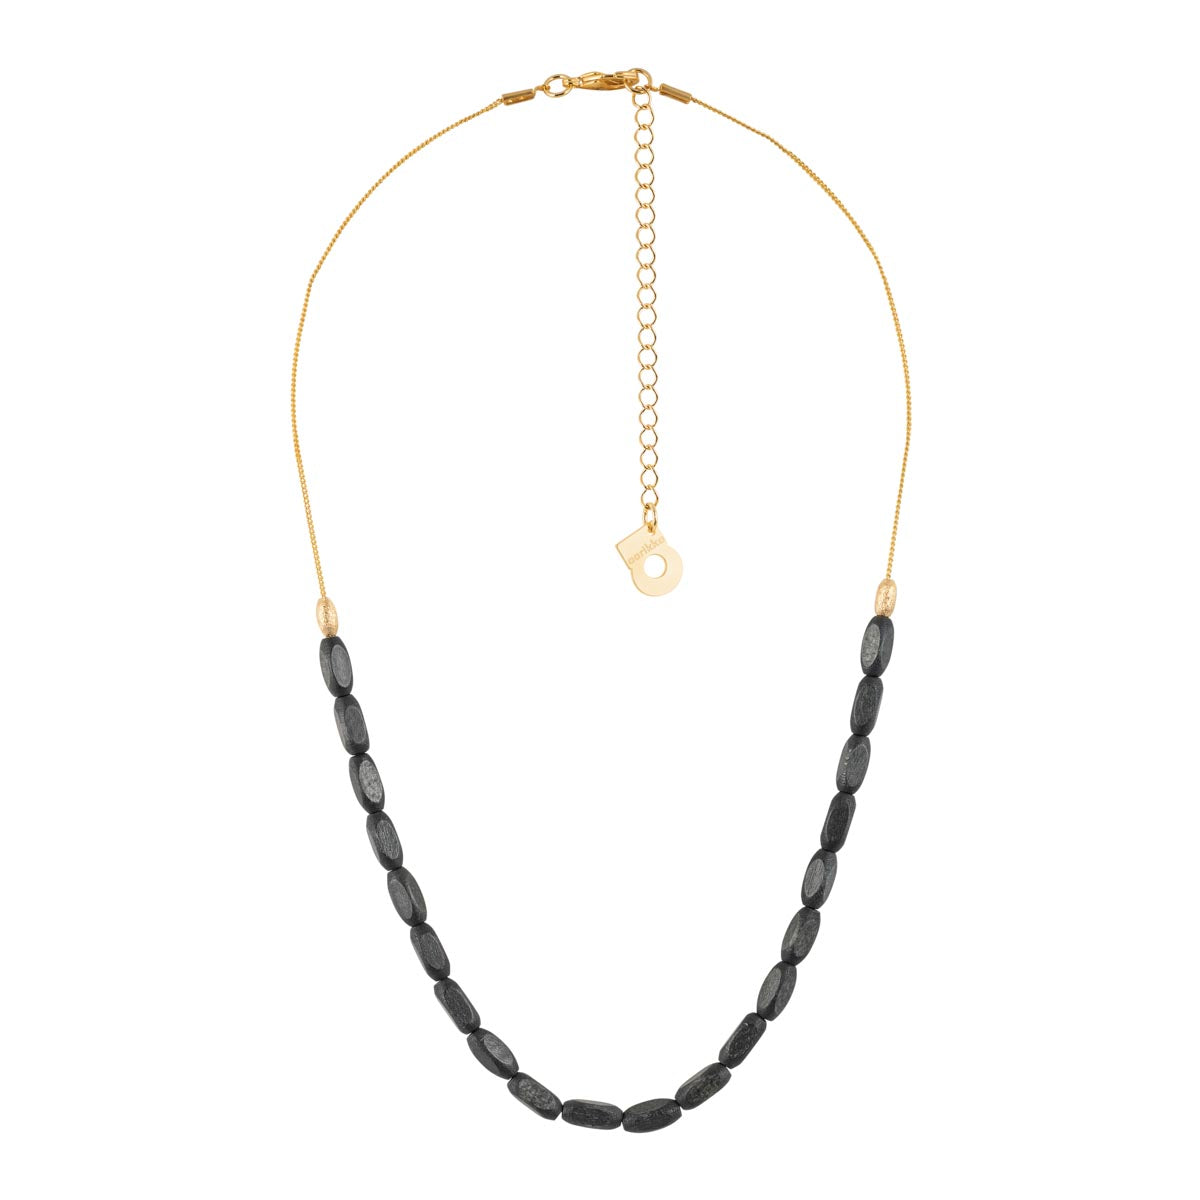 Elvira necklace, black and gold